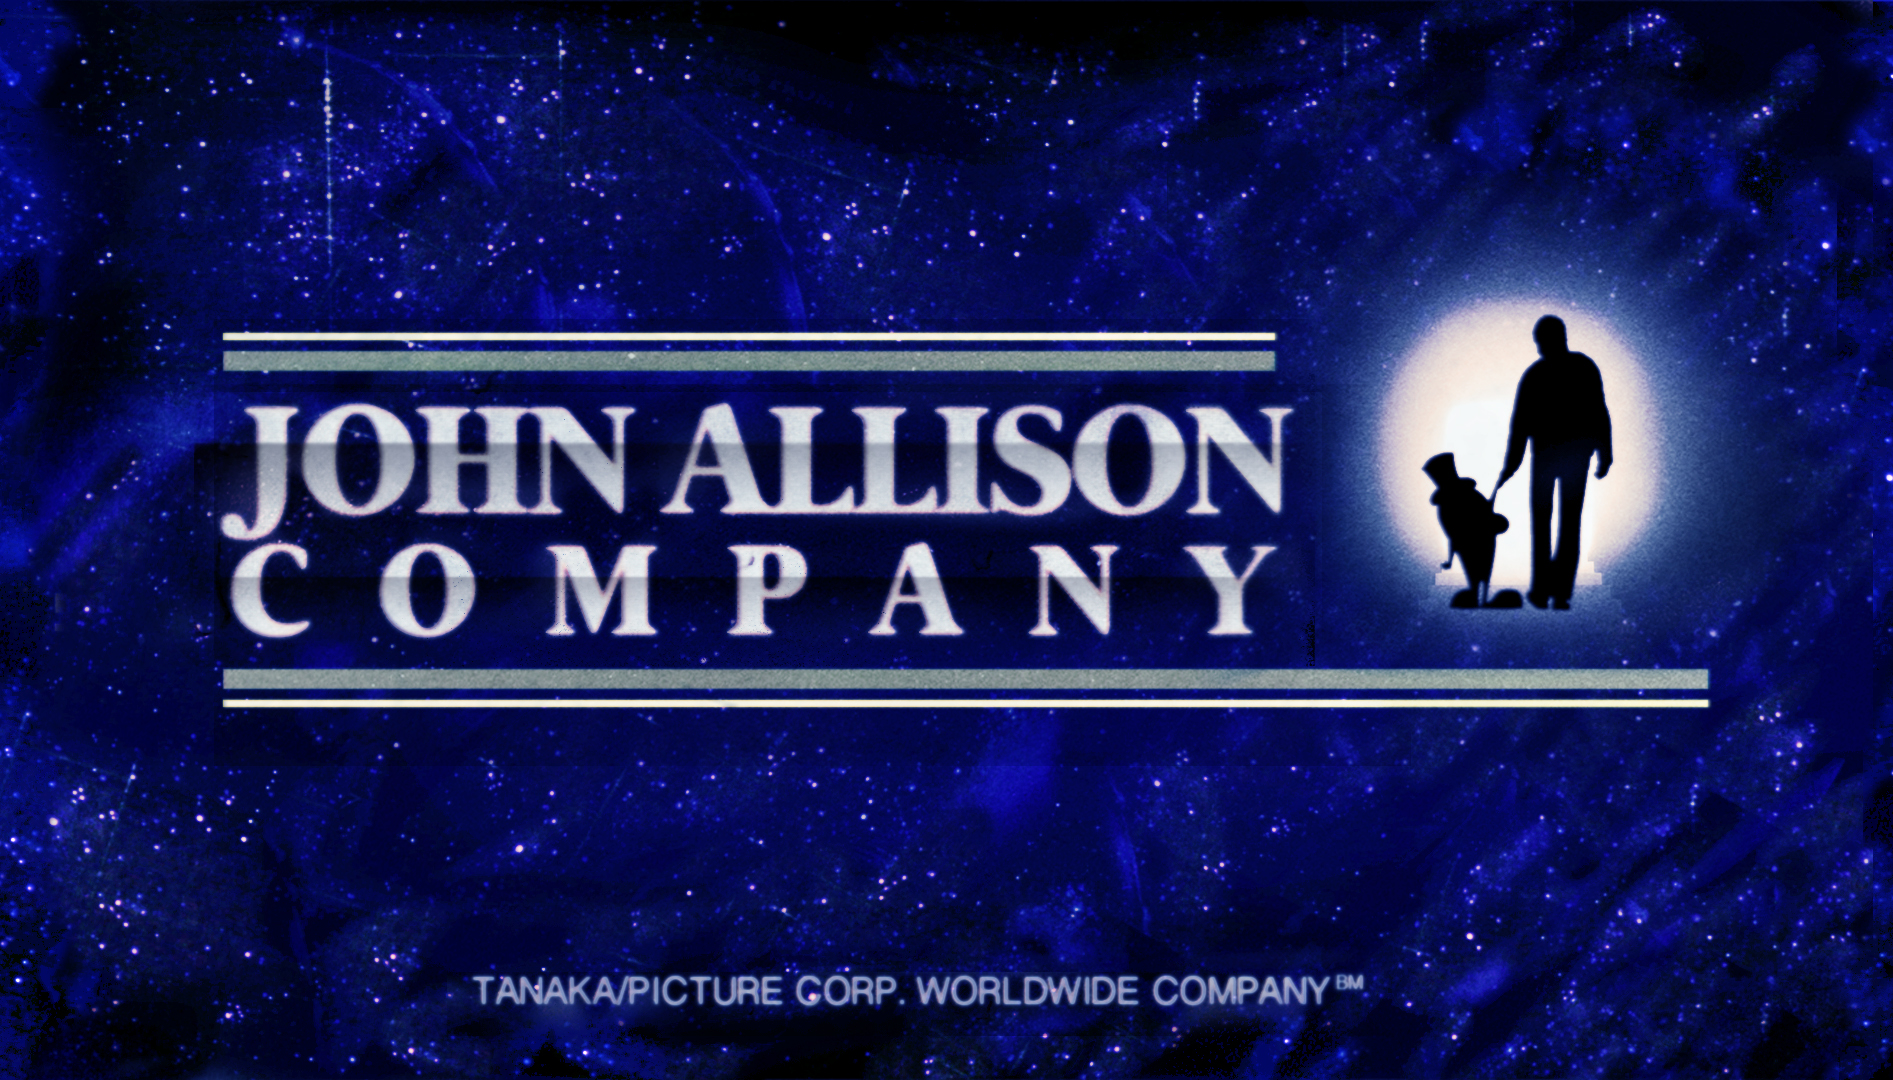 John Allison Company Parody Title Card